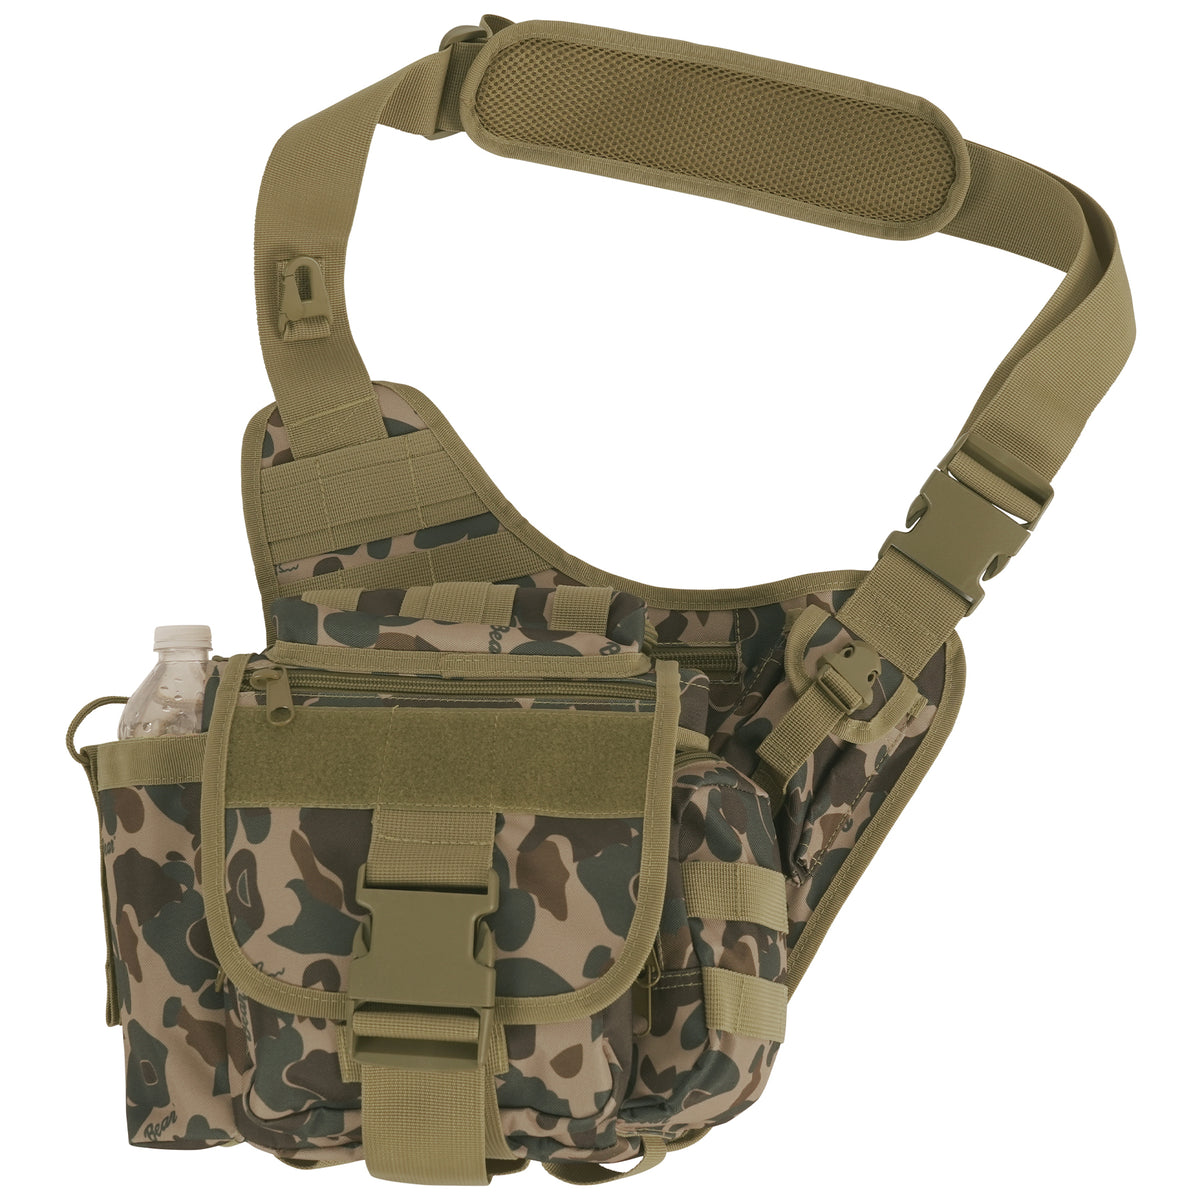 Rothco X Bear Archery Fred Bear Camo Concealed Carry Tactical Bag